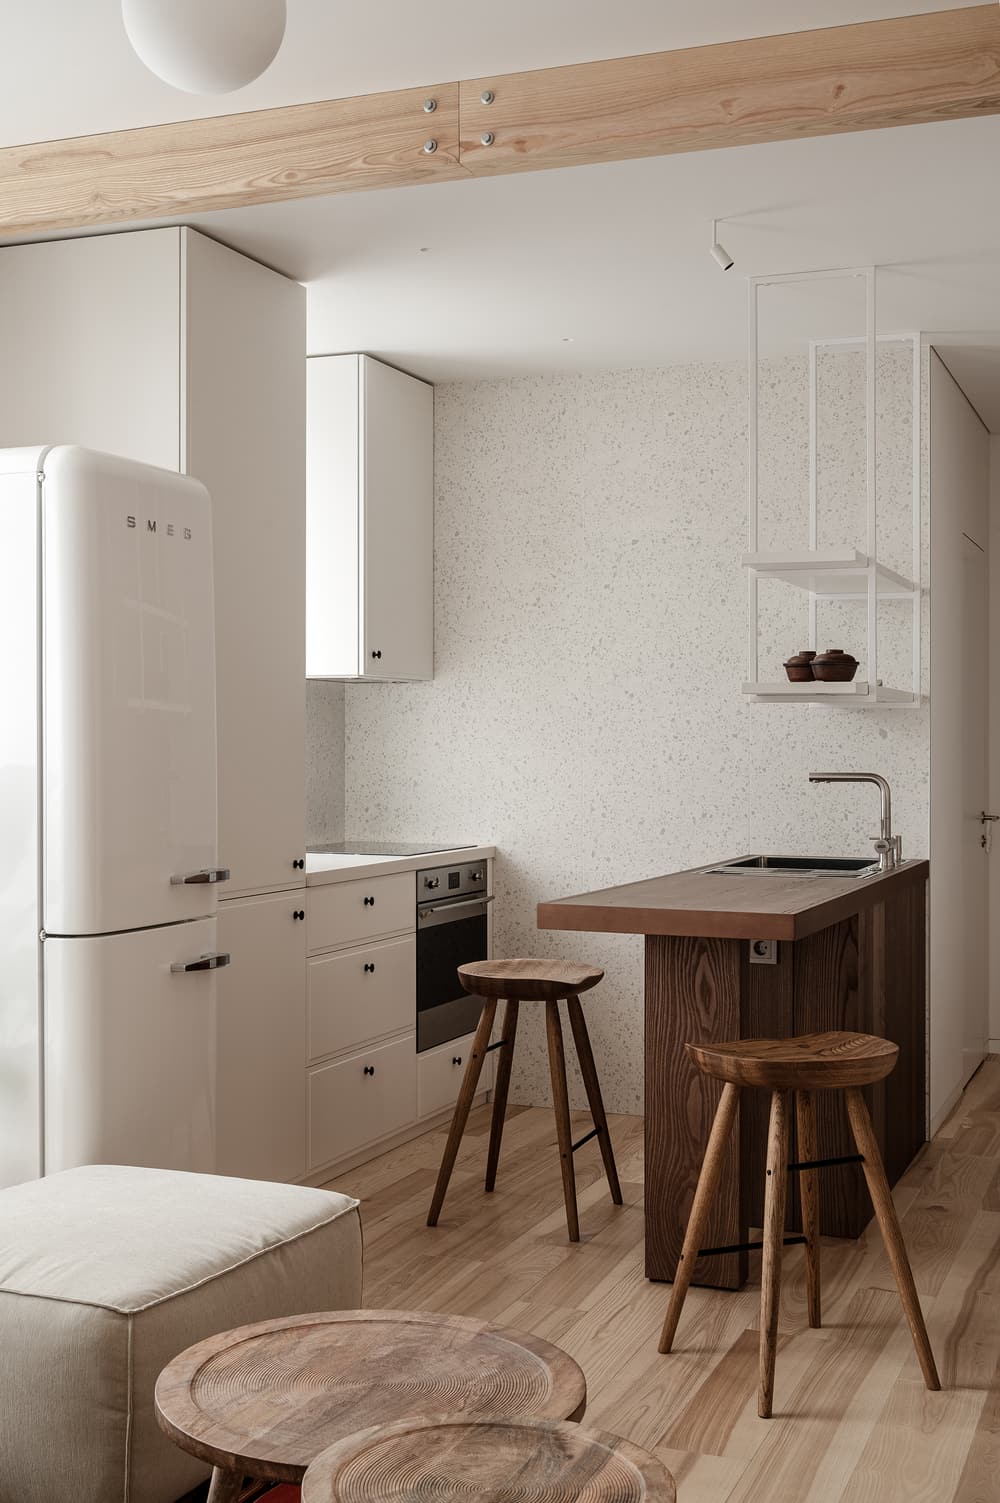 Ukrainian Studio Hi Atelier Releases Koti Apartment